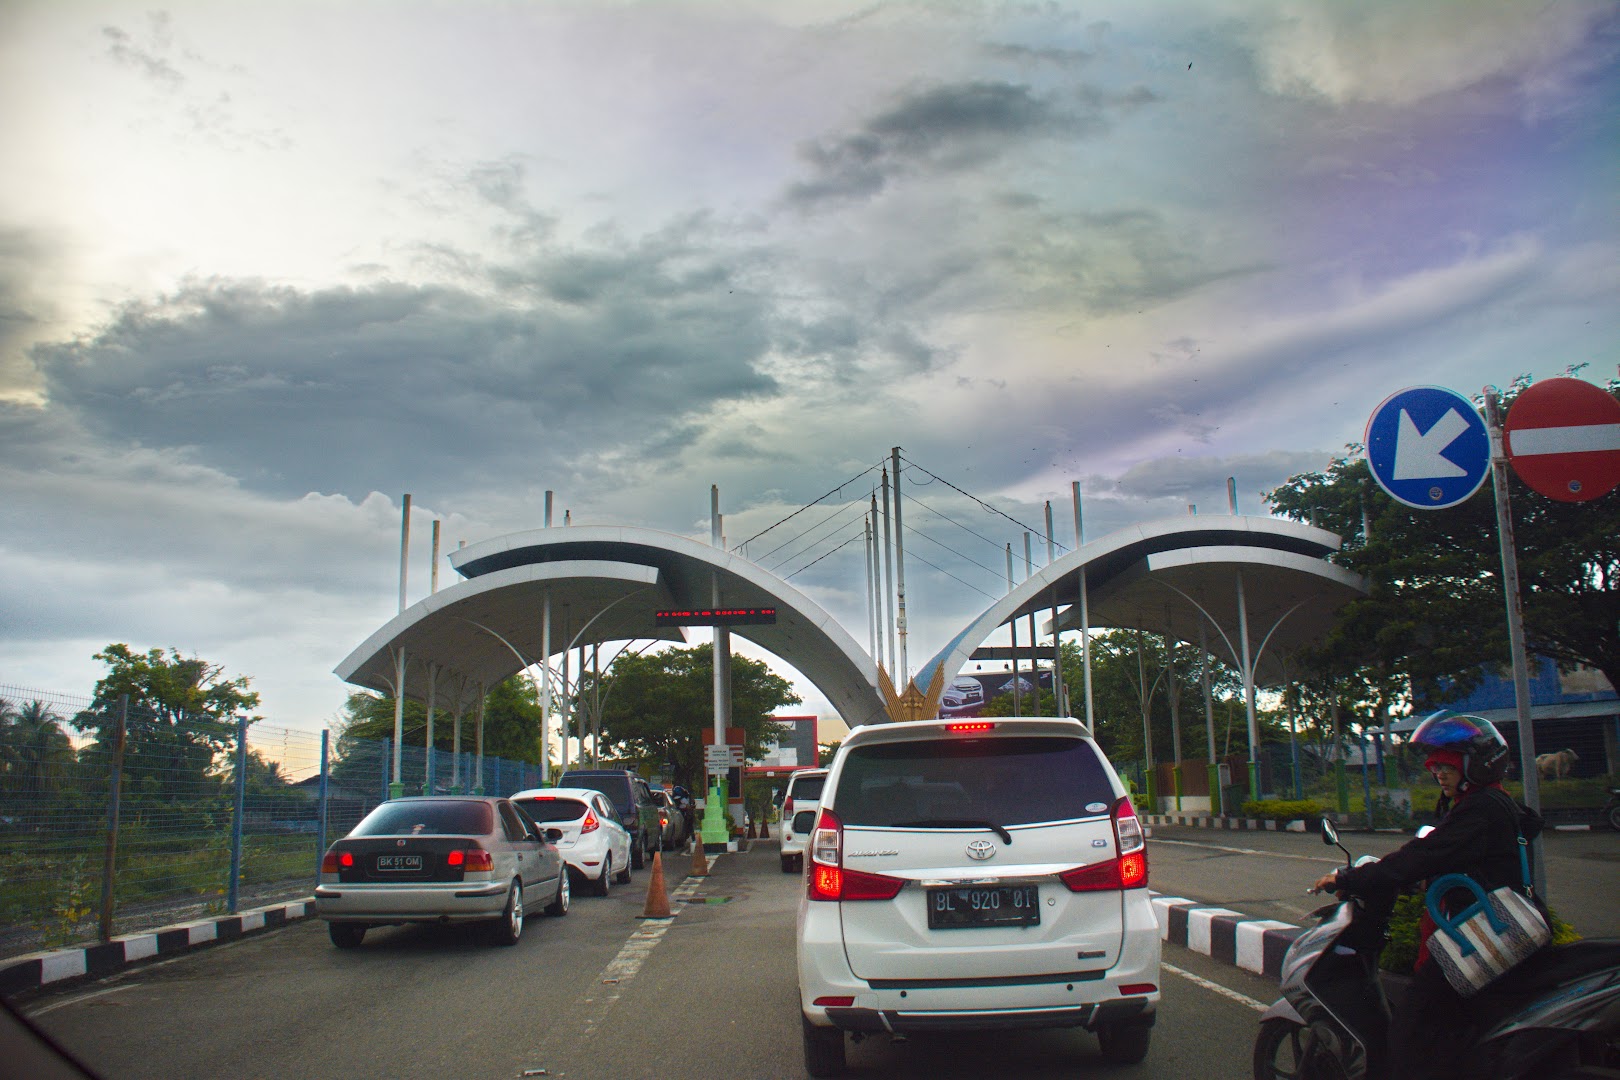 Main Entrance Sultan Iskandar Muda Airport Photo